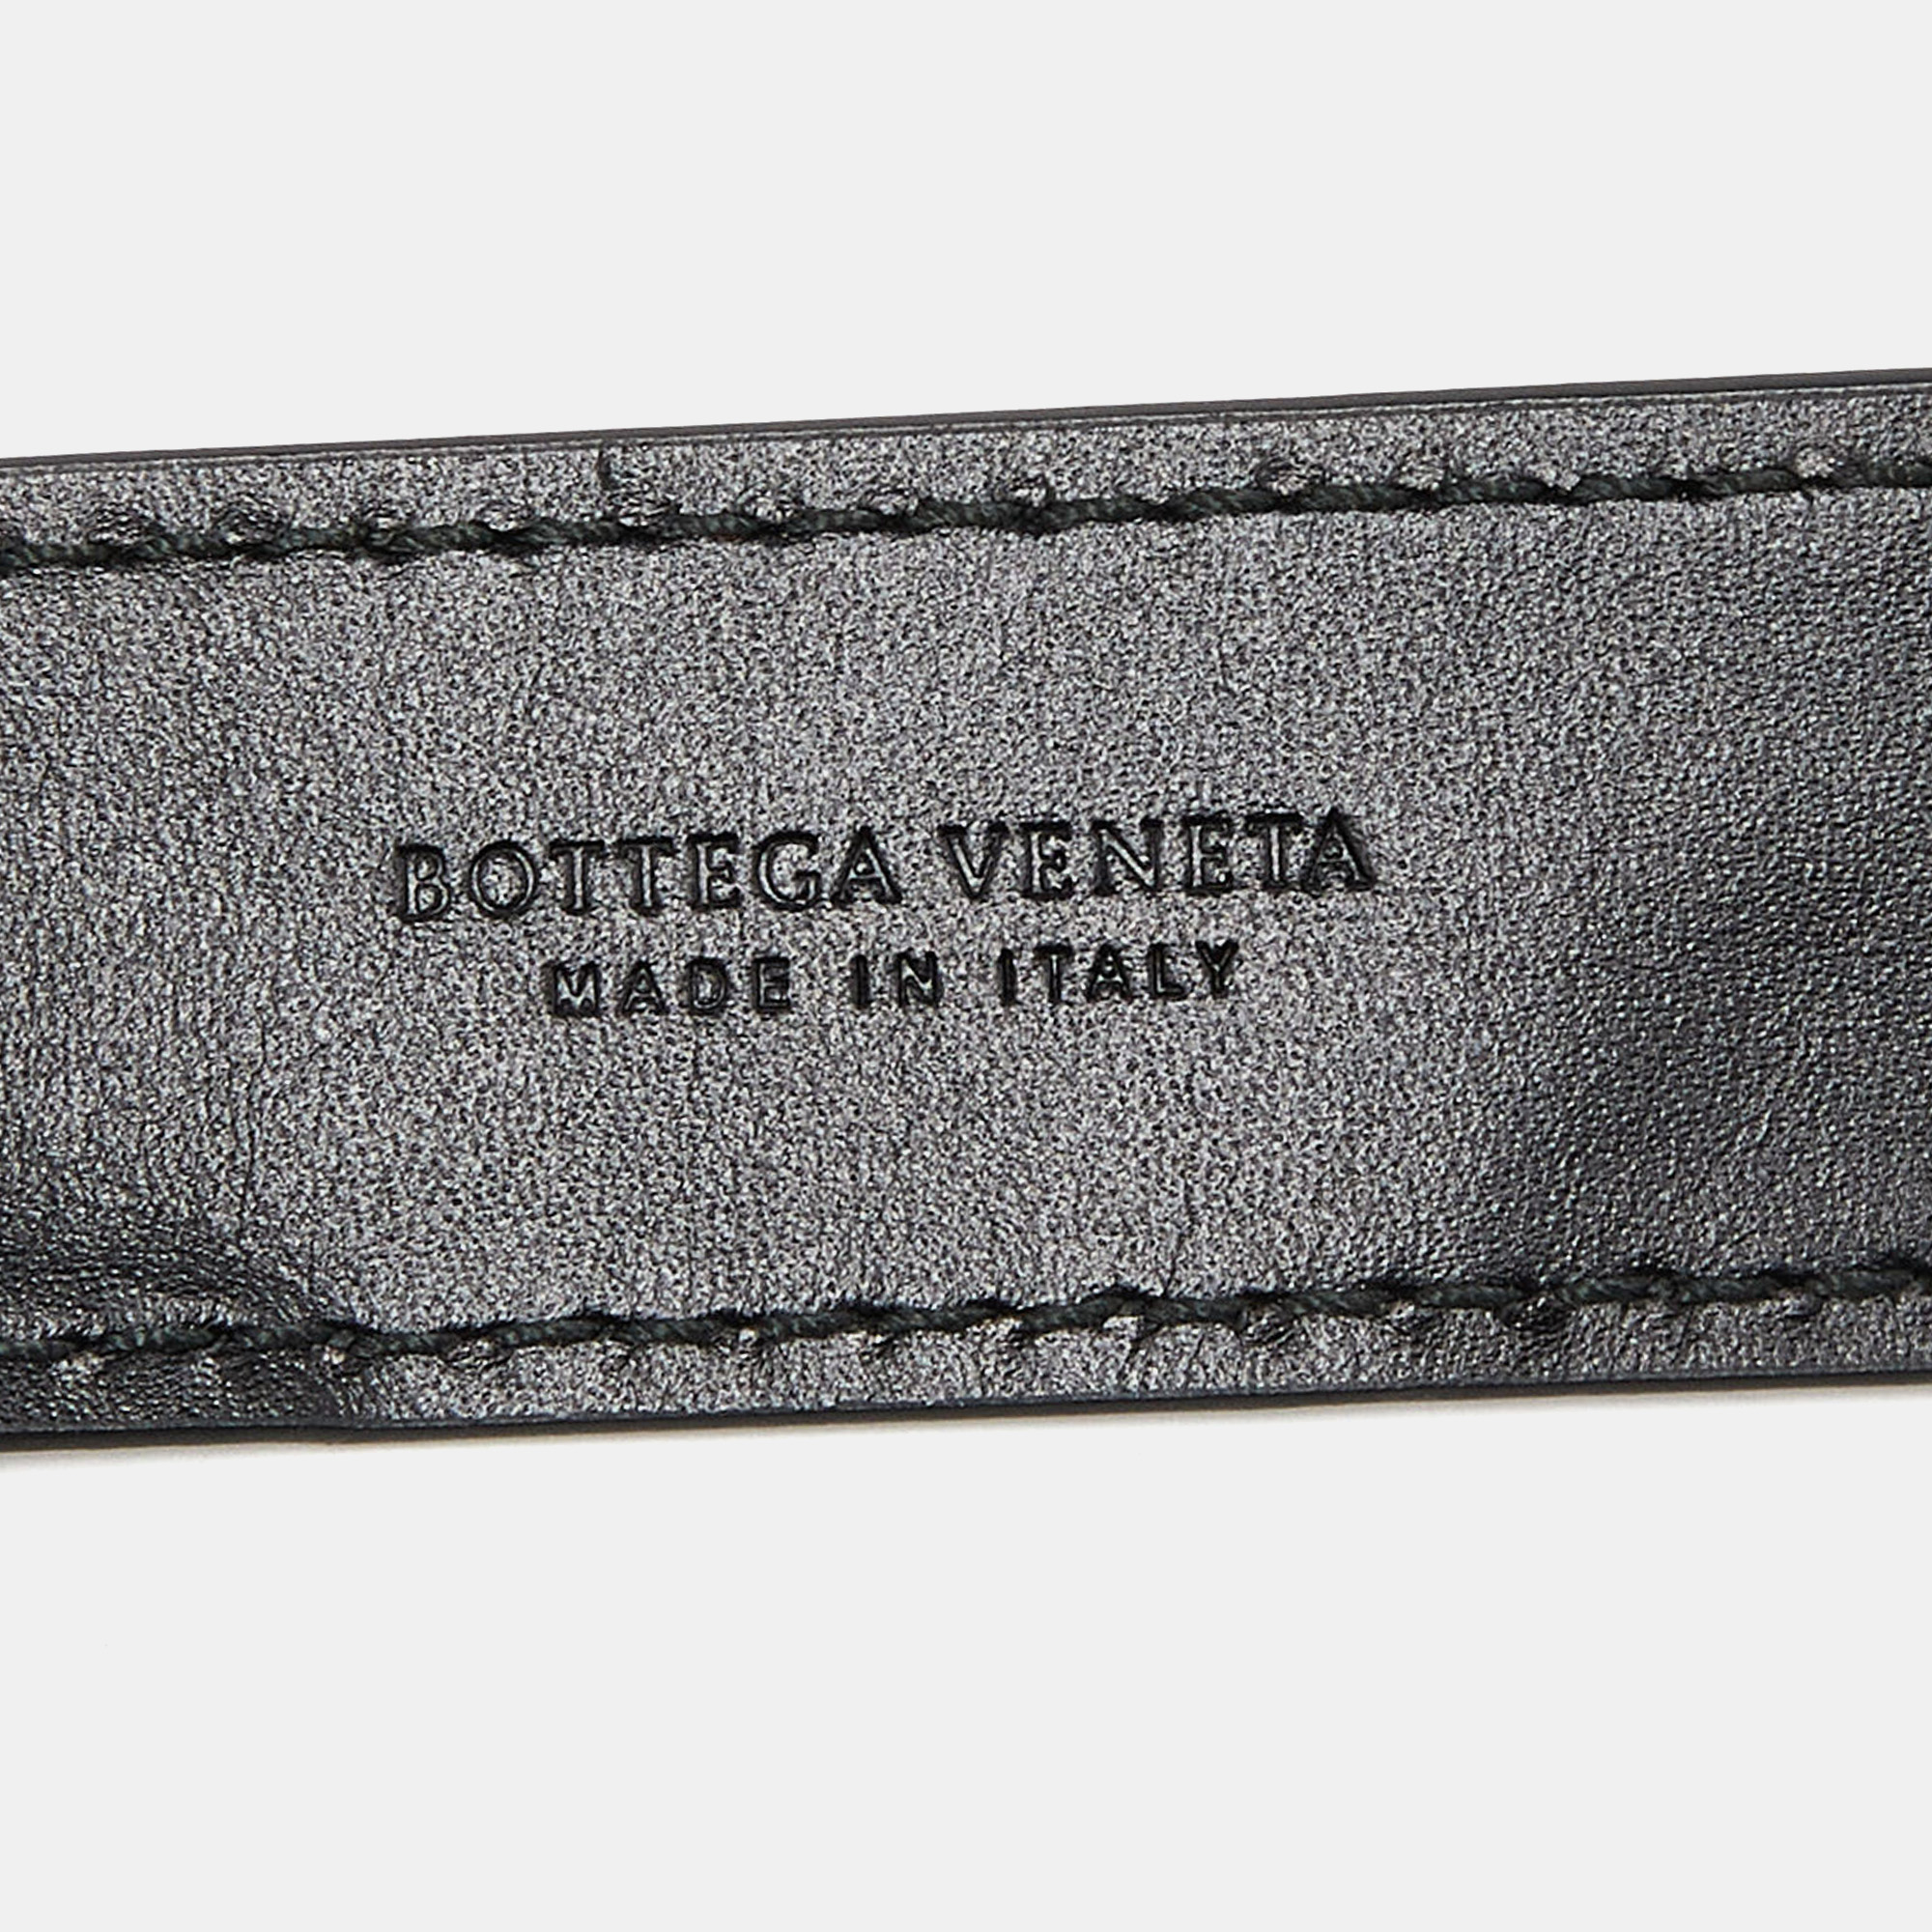 Bottega Veneta Black Leather Slim Buckle Belt 85CM